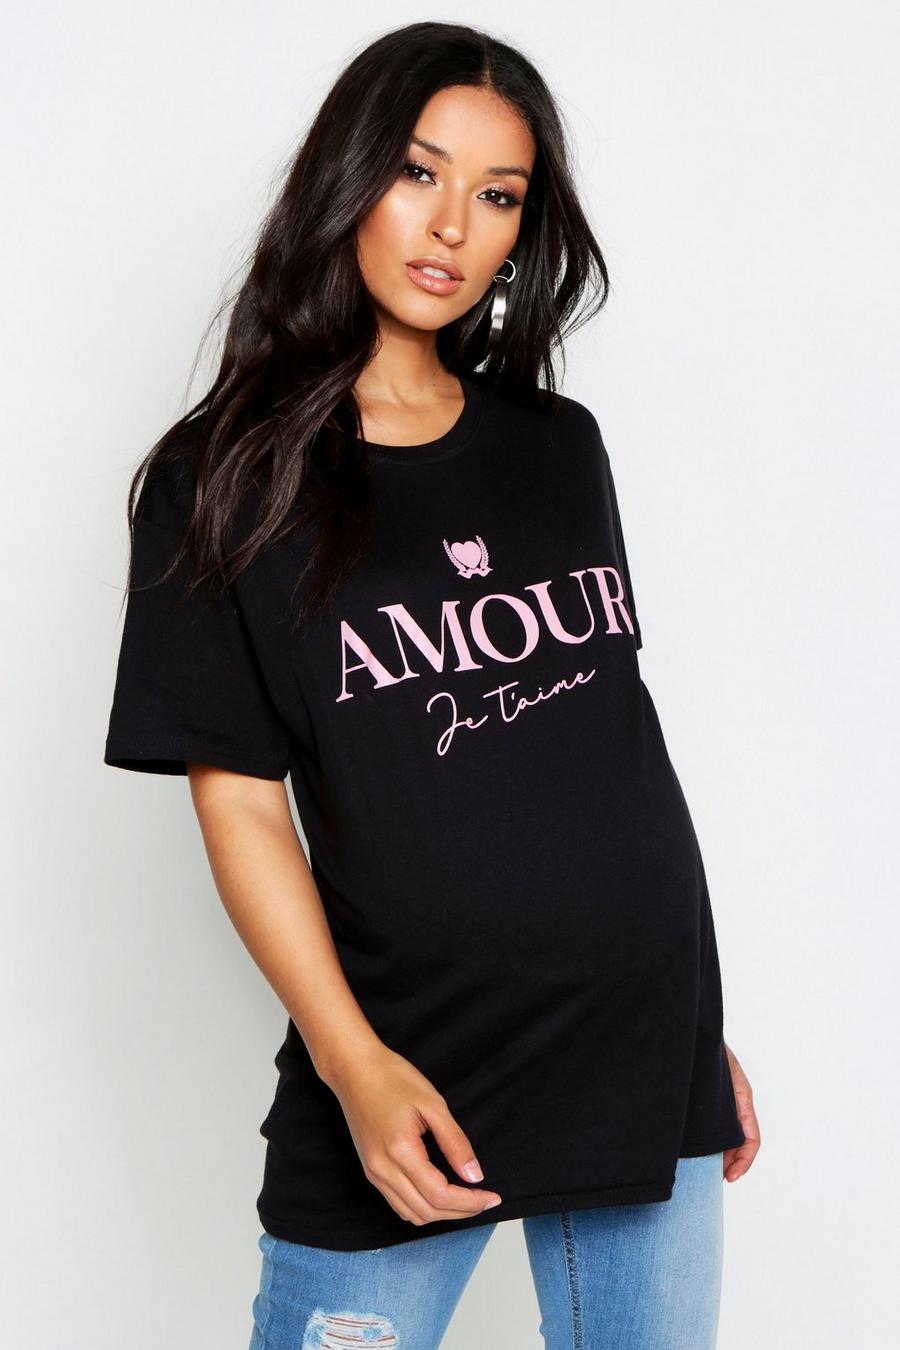 Camiseta con eslogan "Amour" premamá image number 1